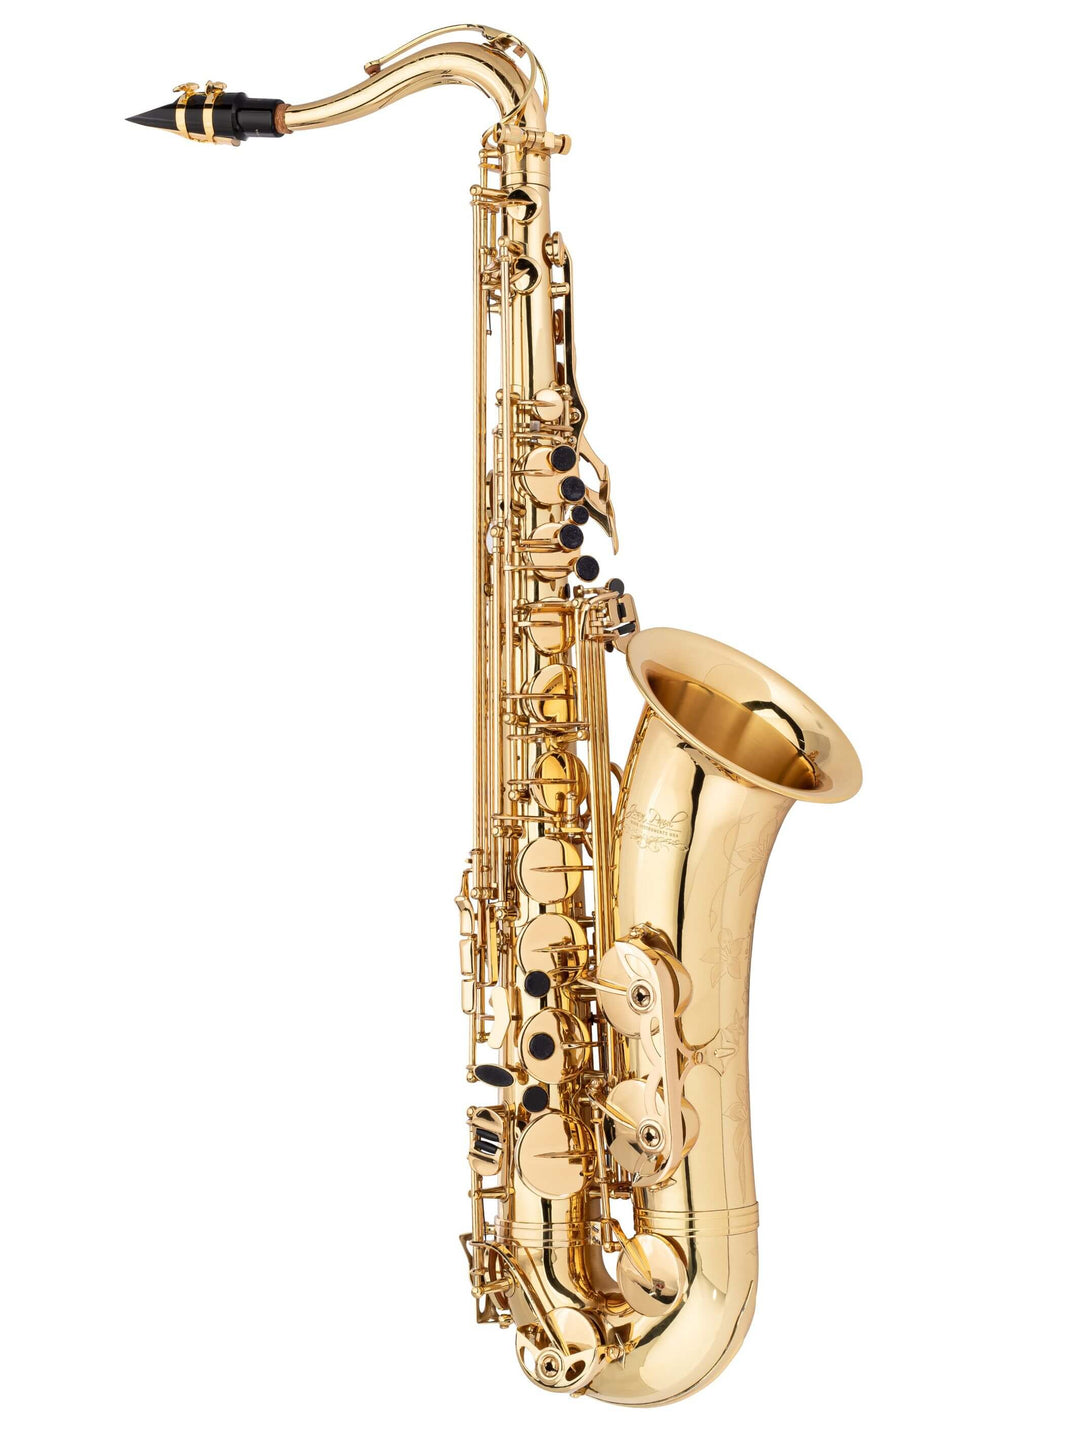 TS-860 Tenor Saxophone Side View 1#finish_brass